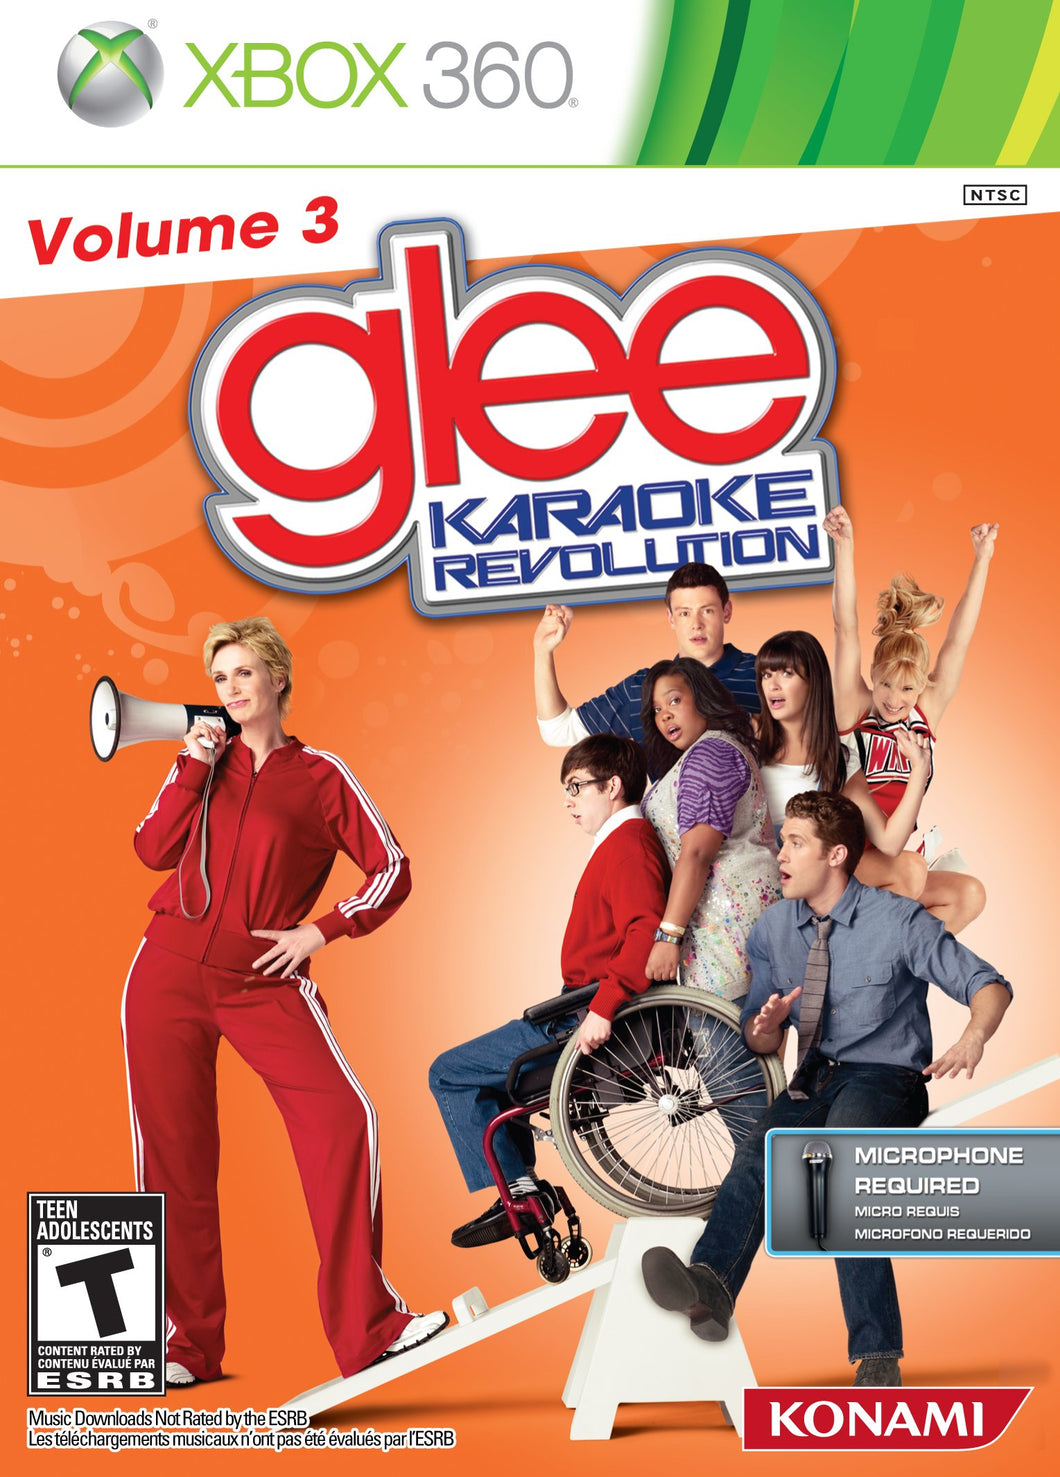 Glee Karaoke Revolution Volume 3 XB360